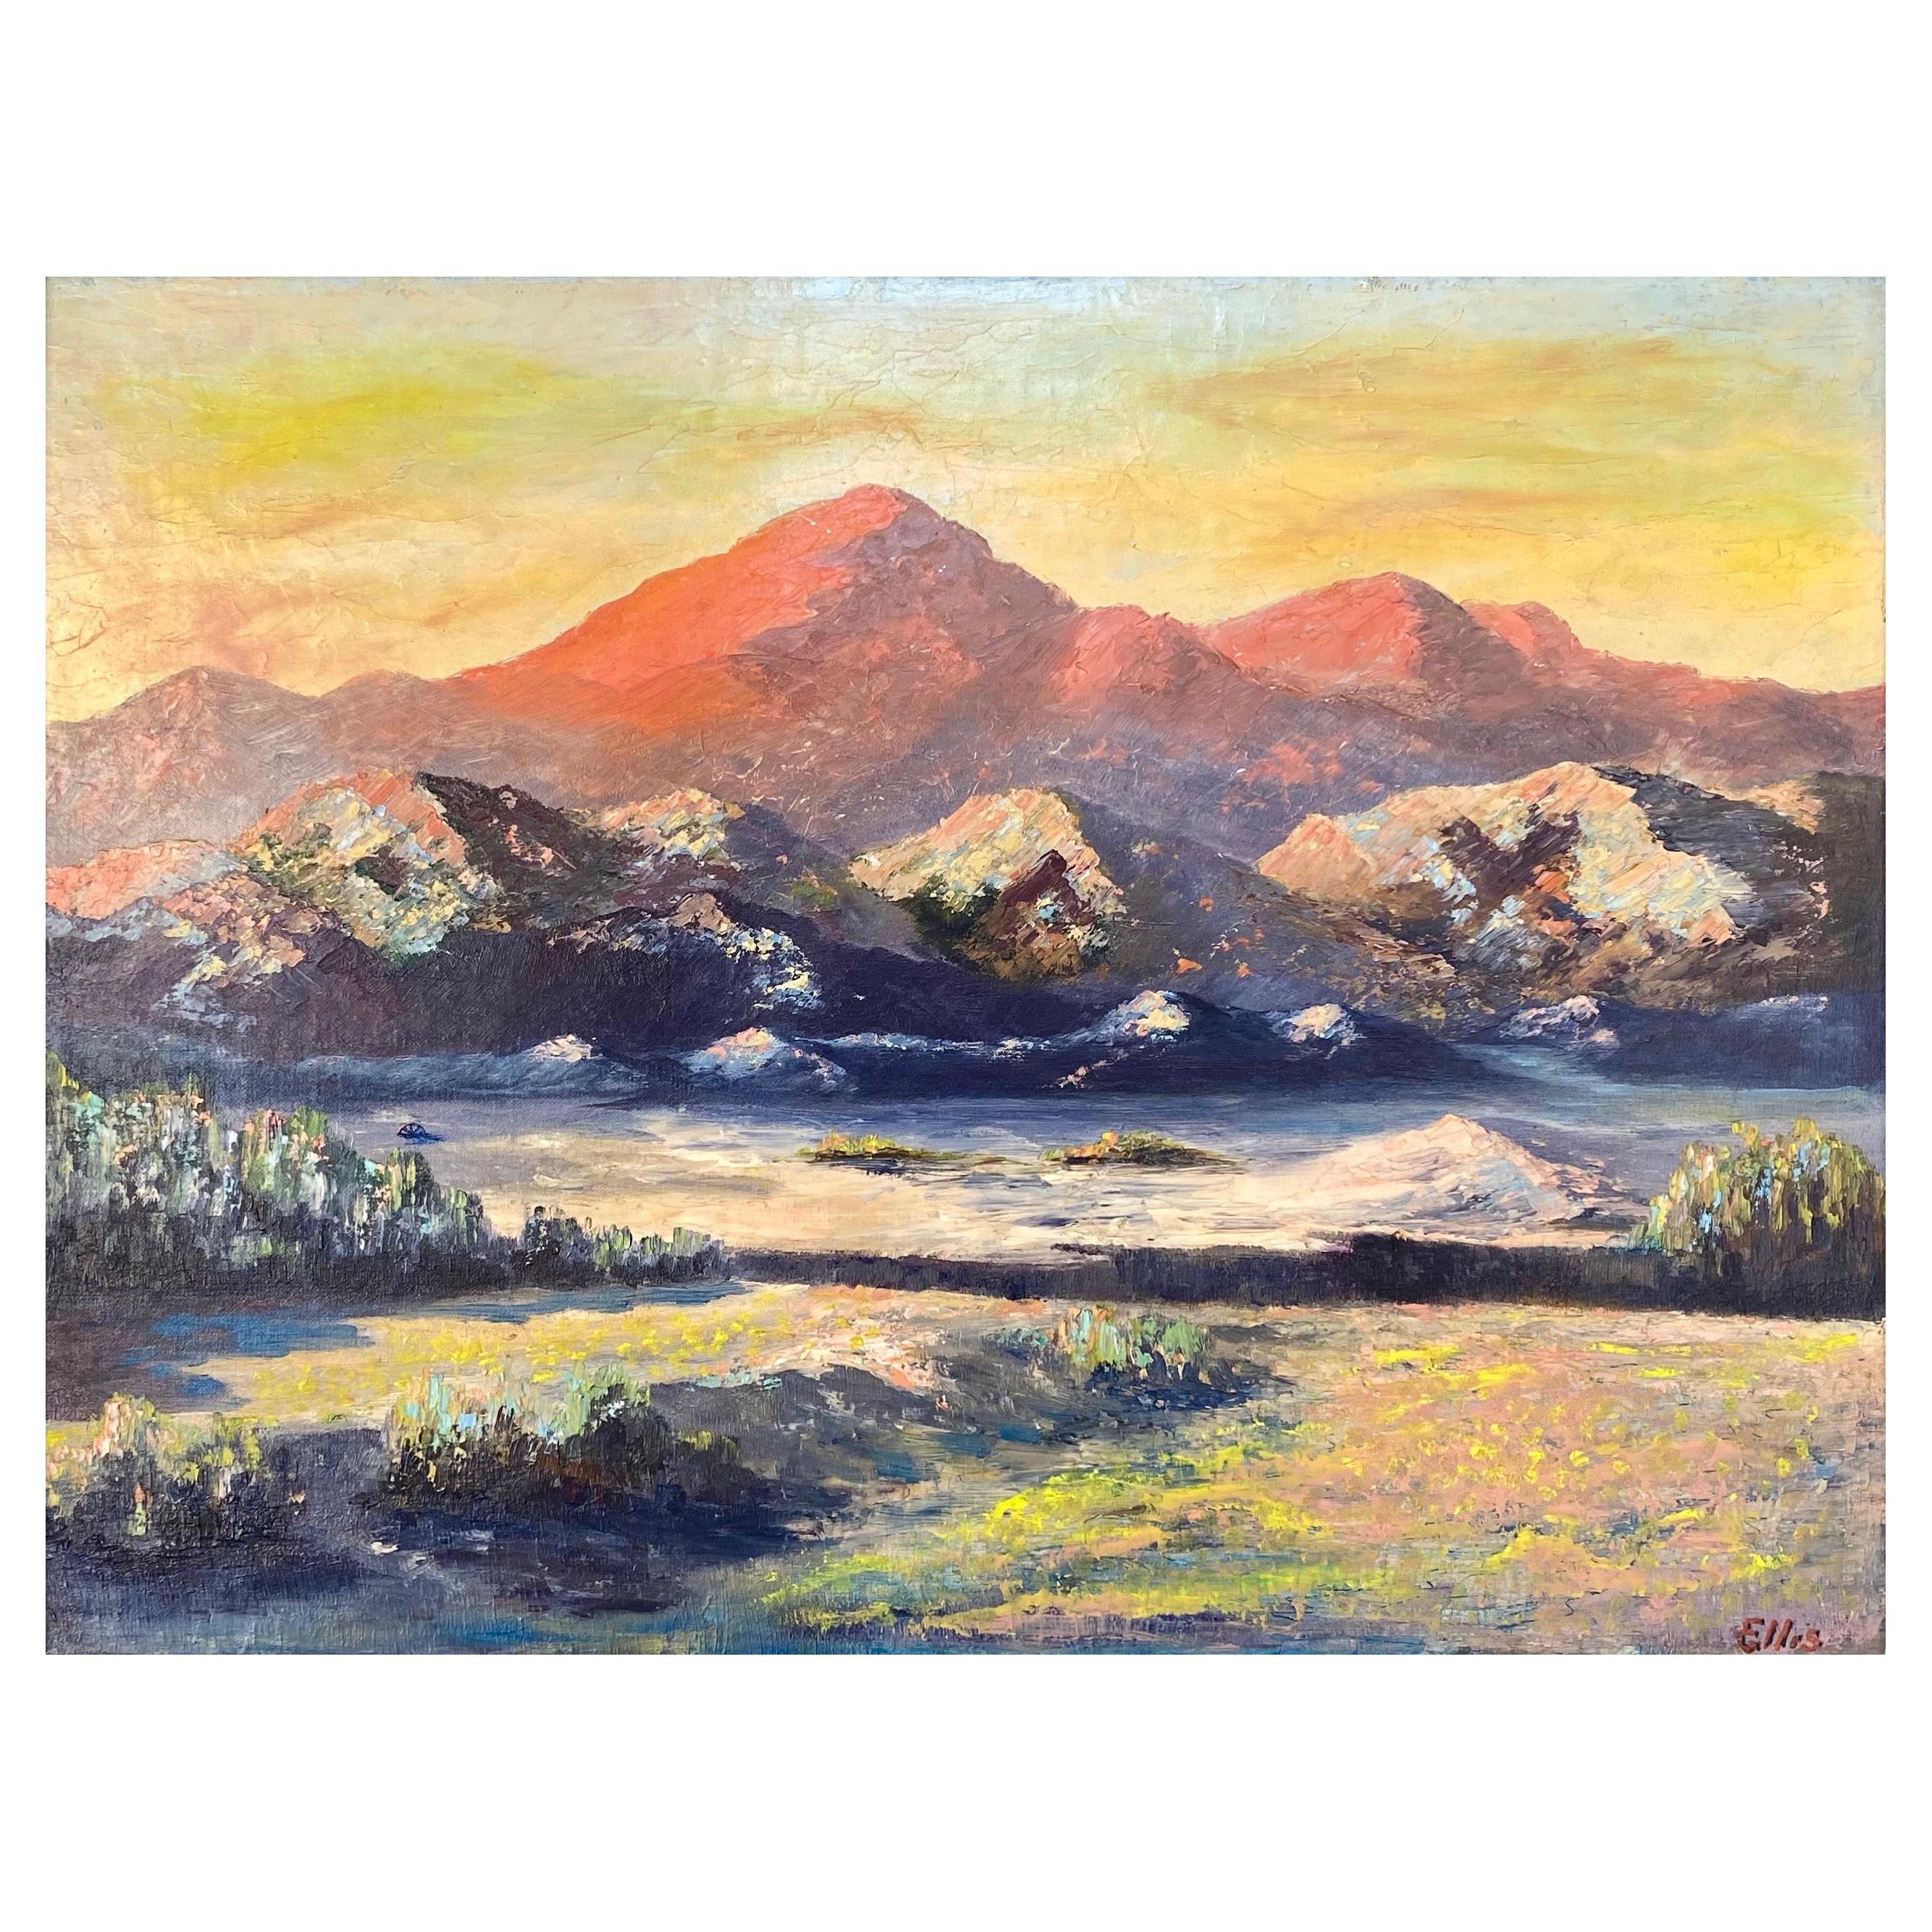 Ellis, Impressionist Landscape Painting of the American West, 1950s